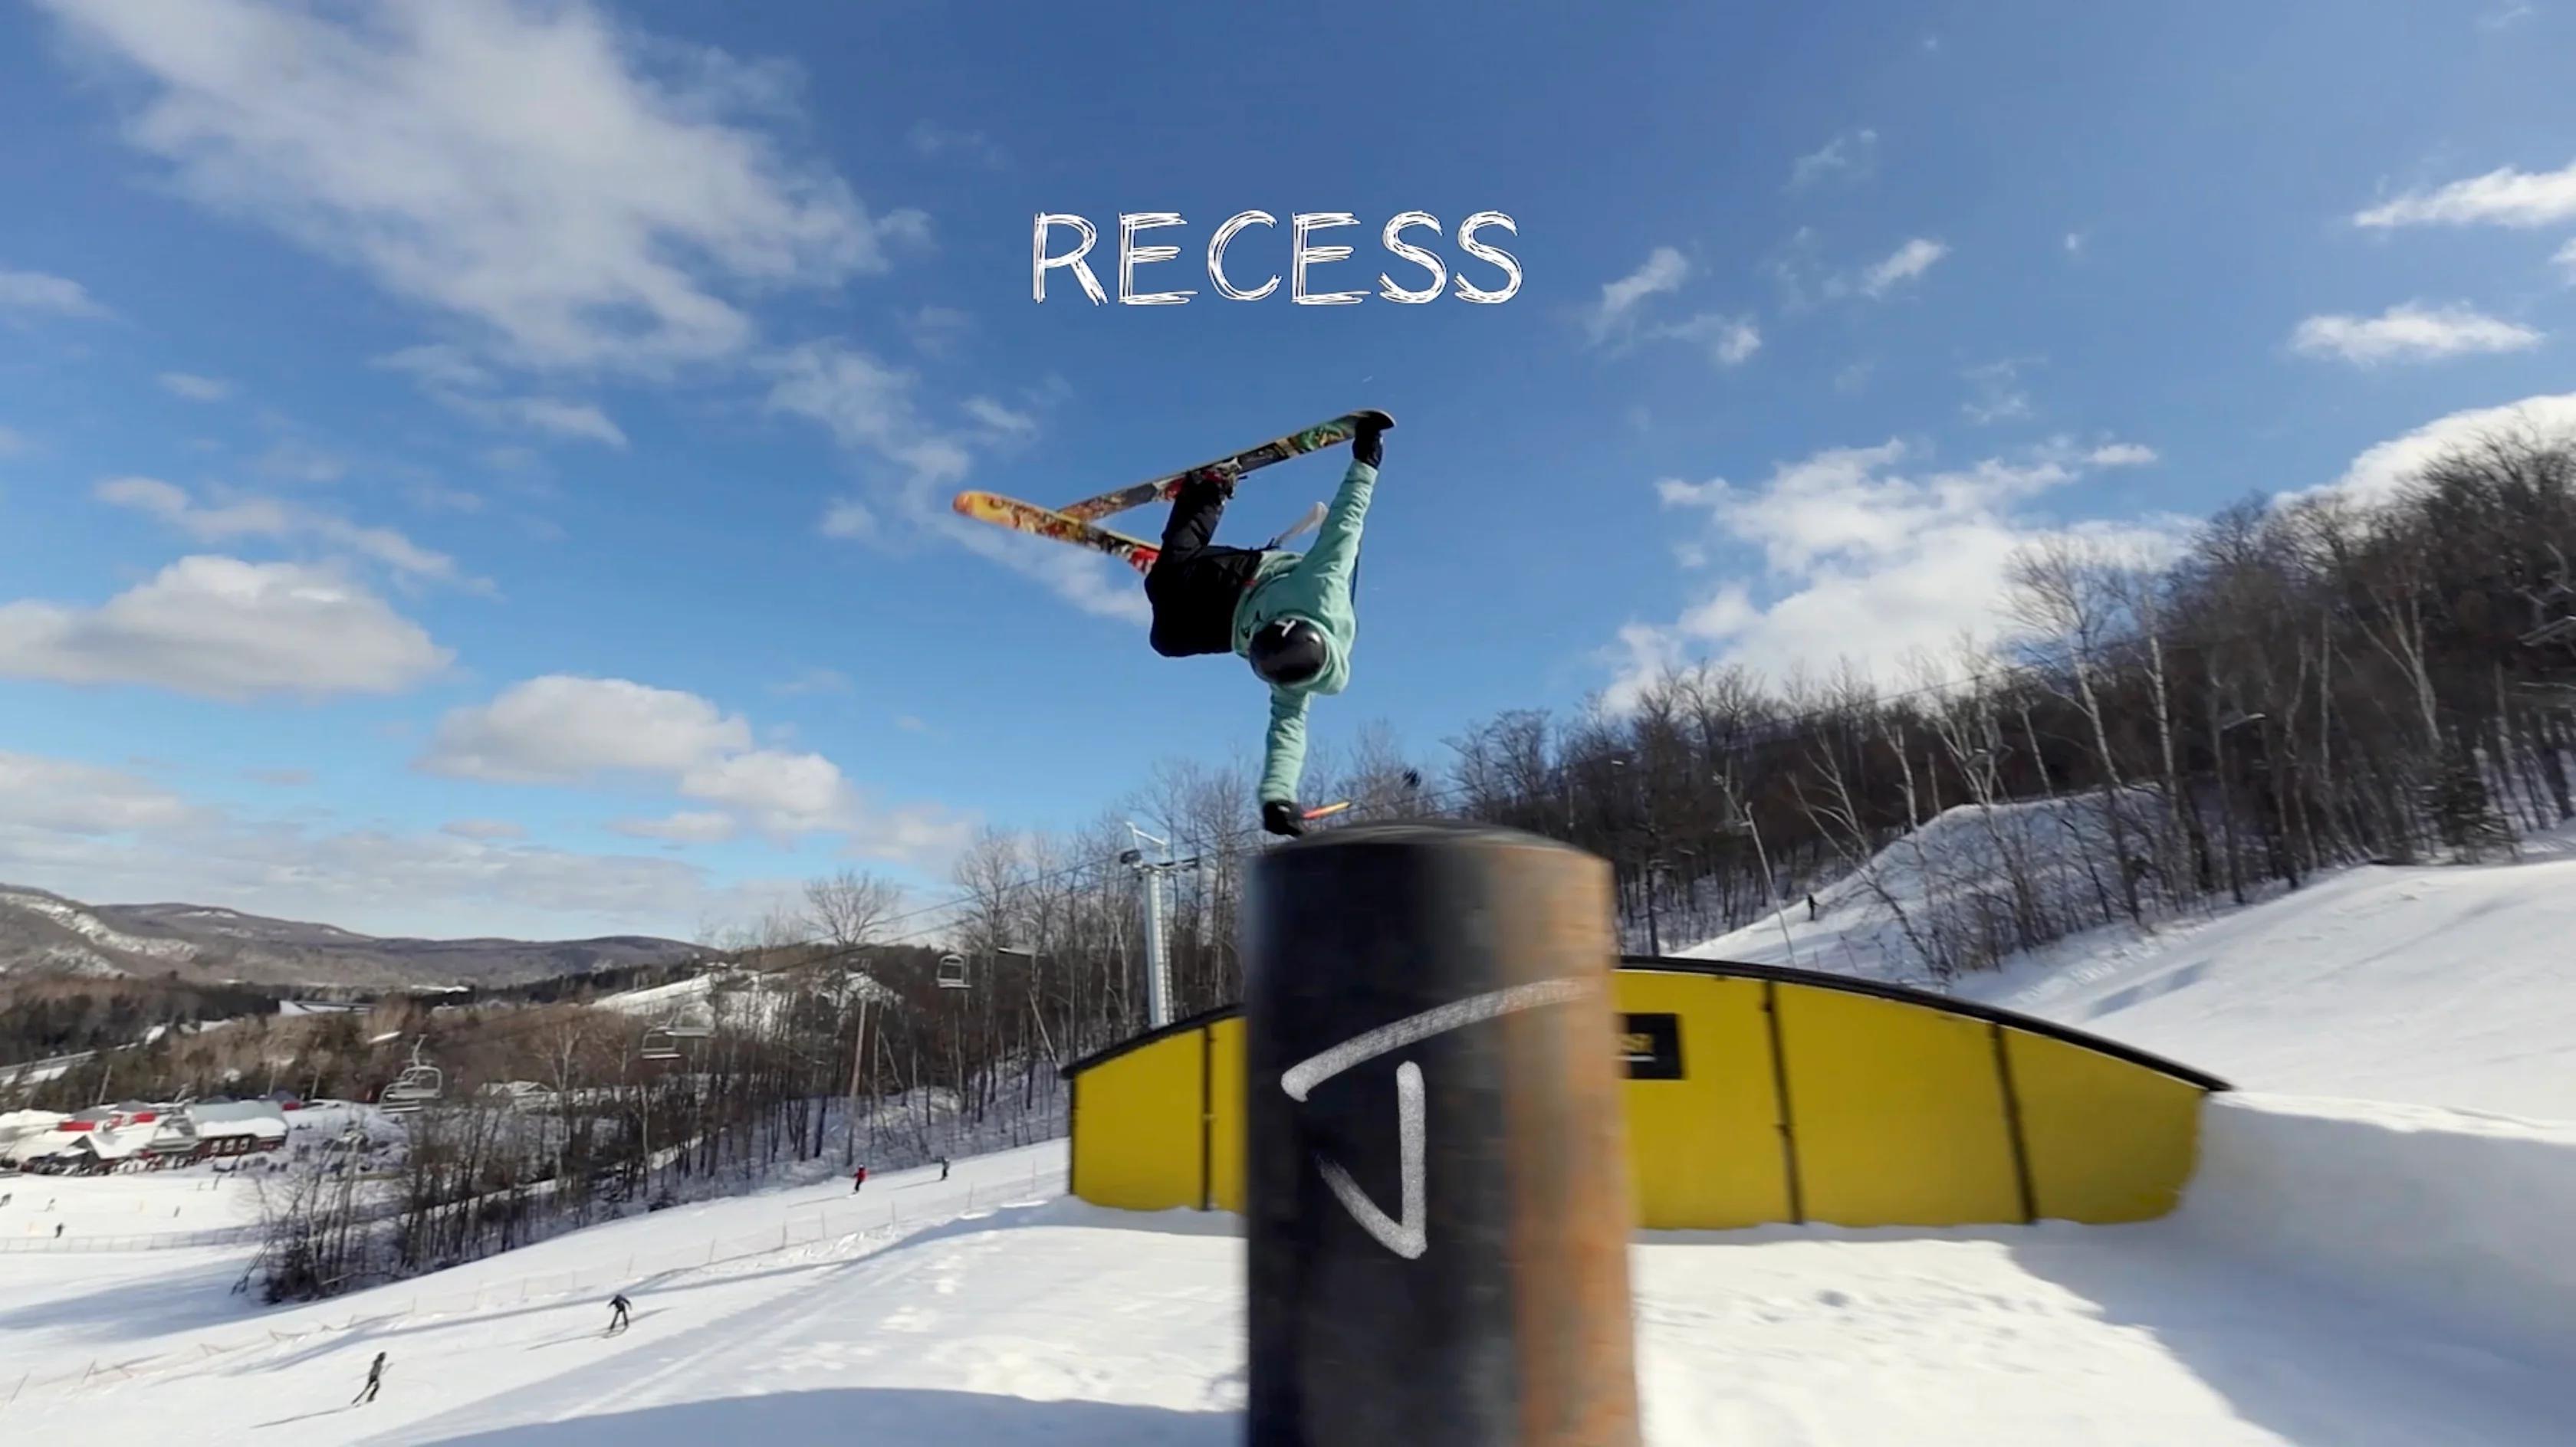 Mat Duf "Recess" Video Image